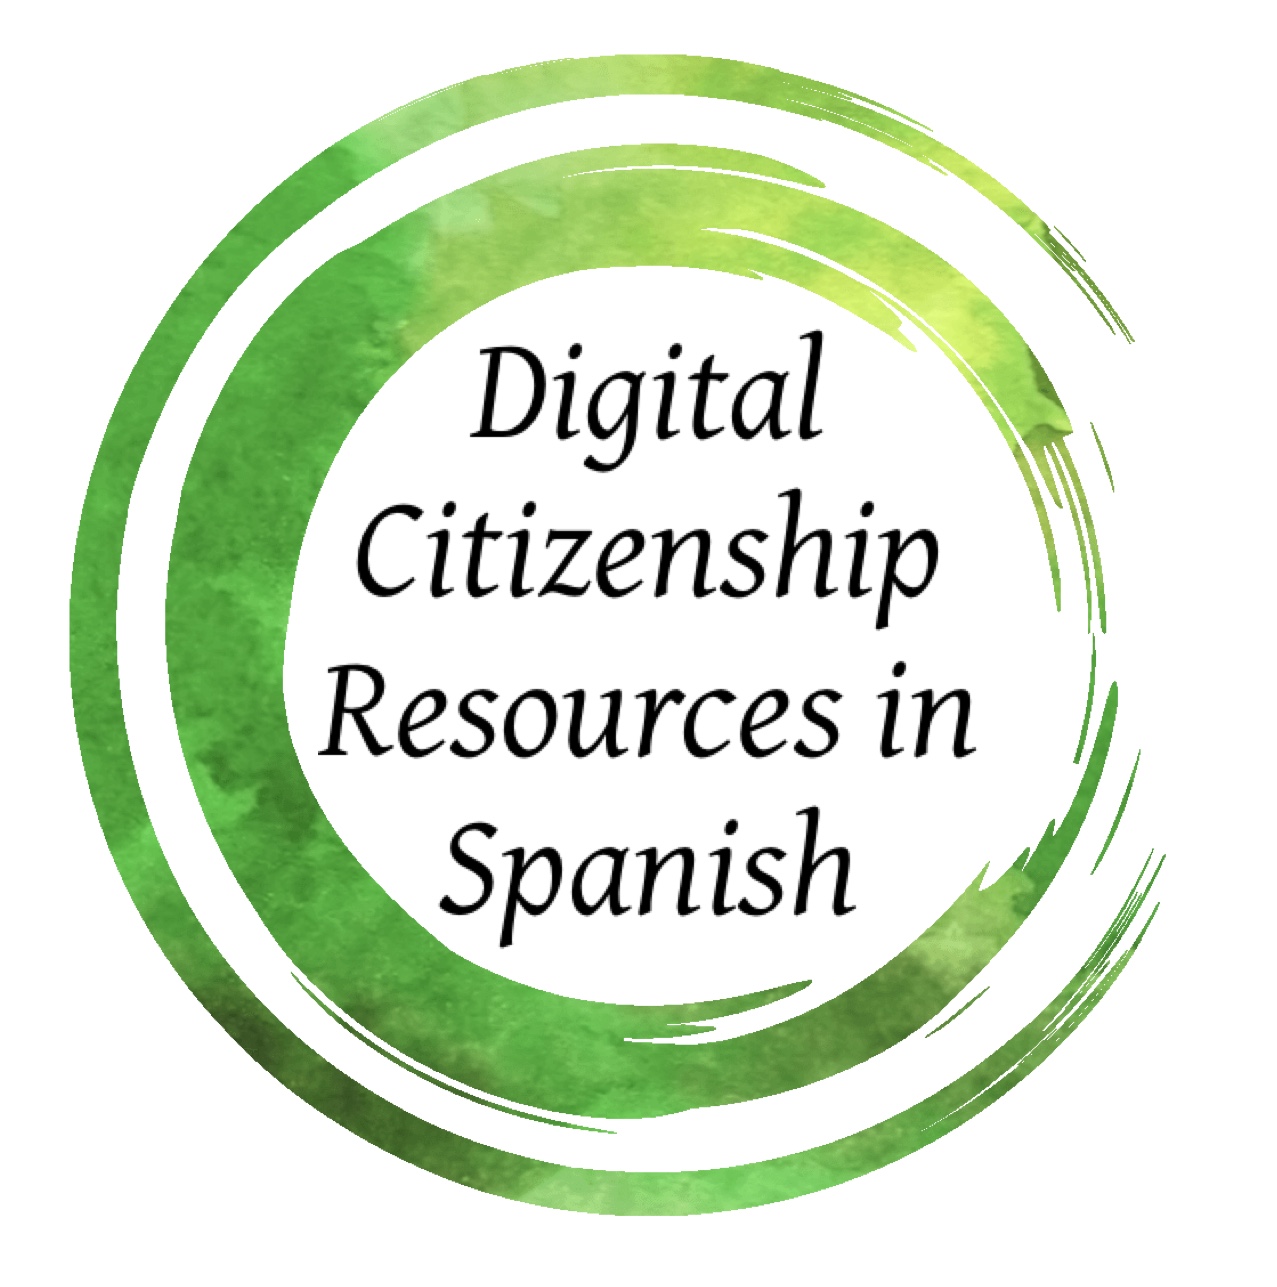 Digital Citizenship Resources in Spanish